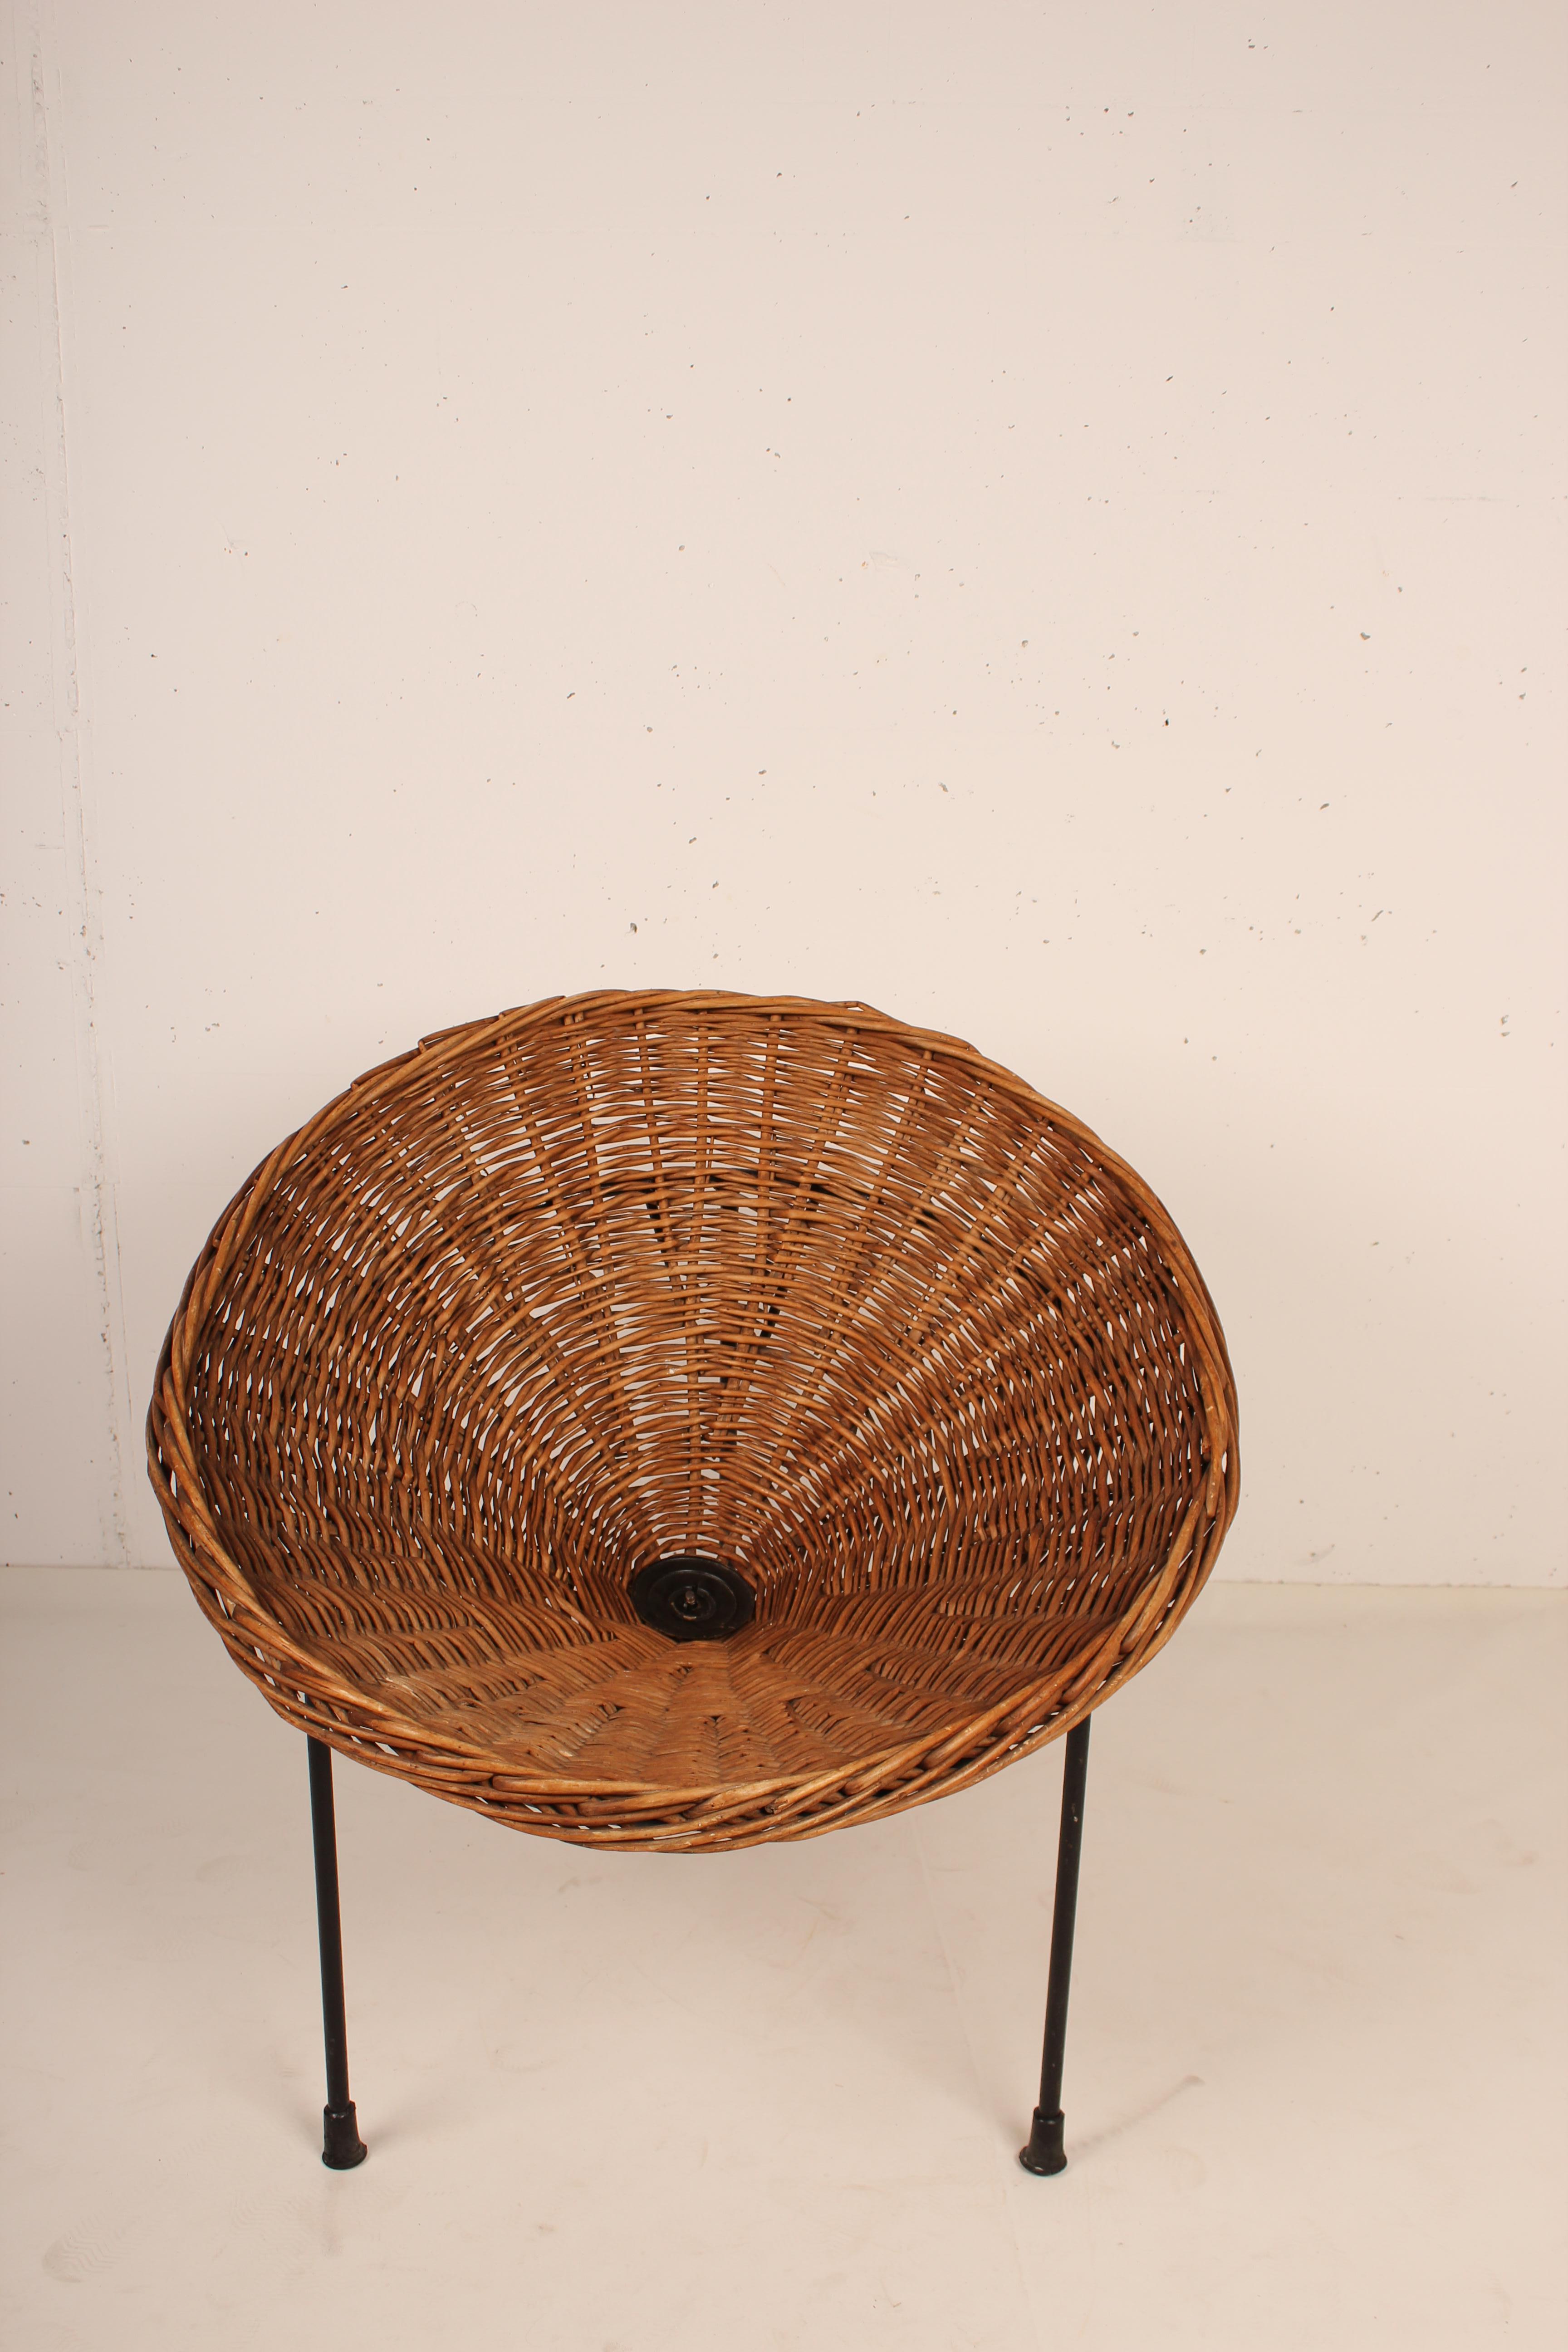 Italian Wicker Sunflower Chair by Roberto Mango for Tecno, Italy, 1952